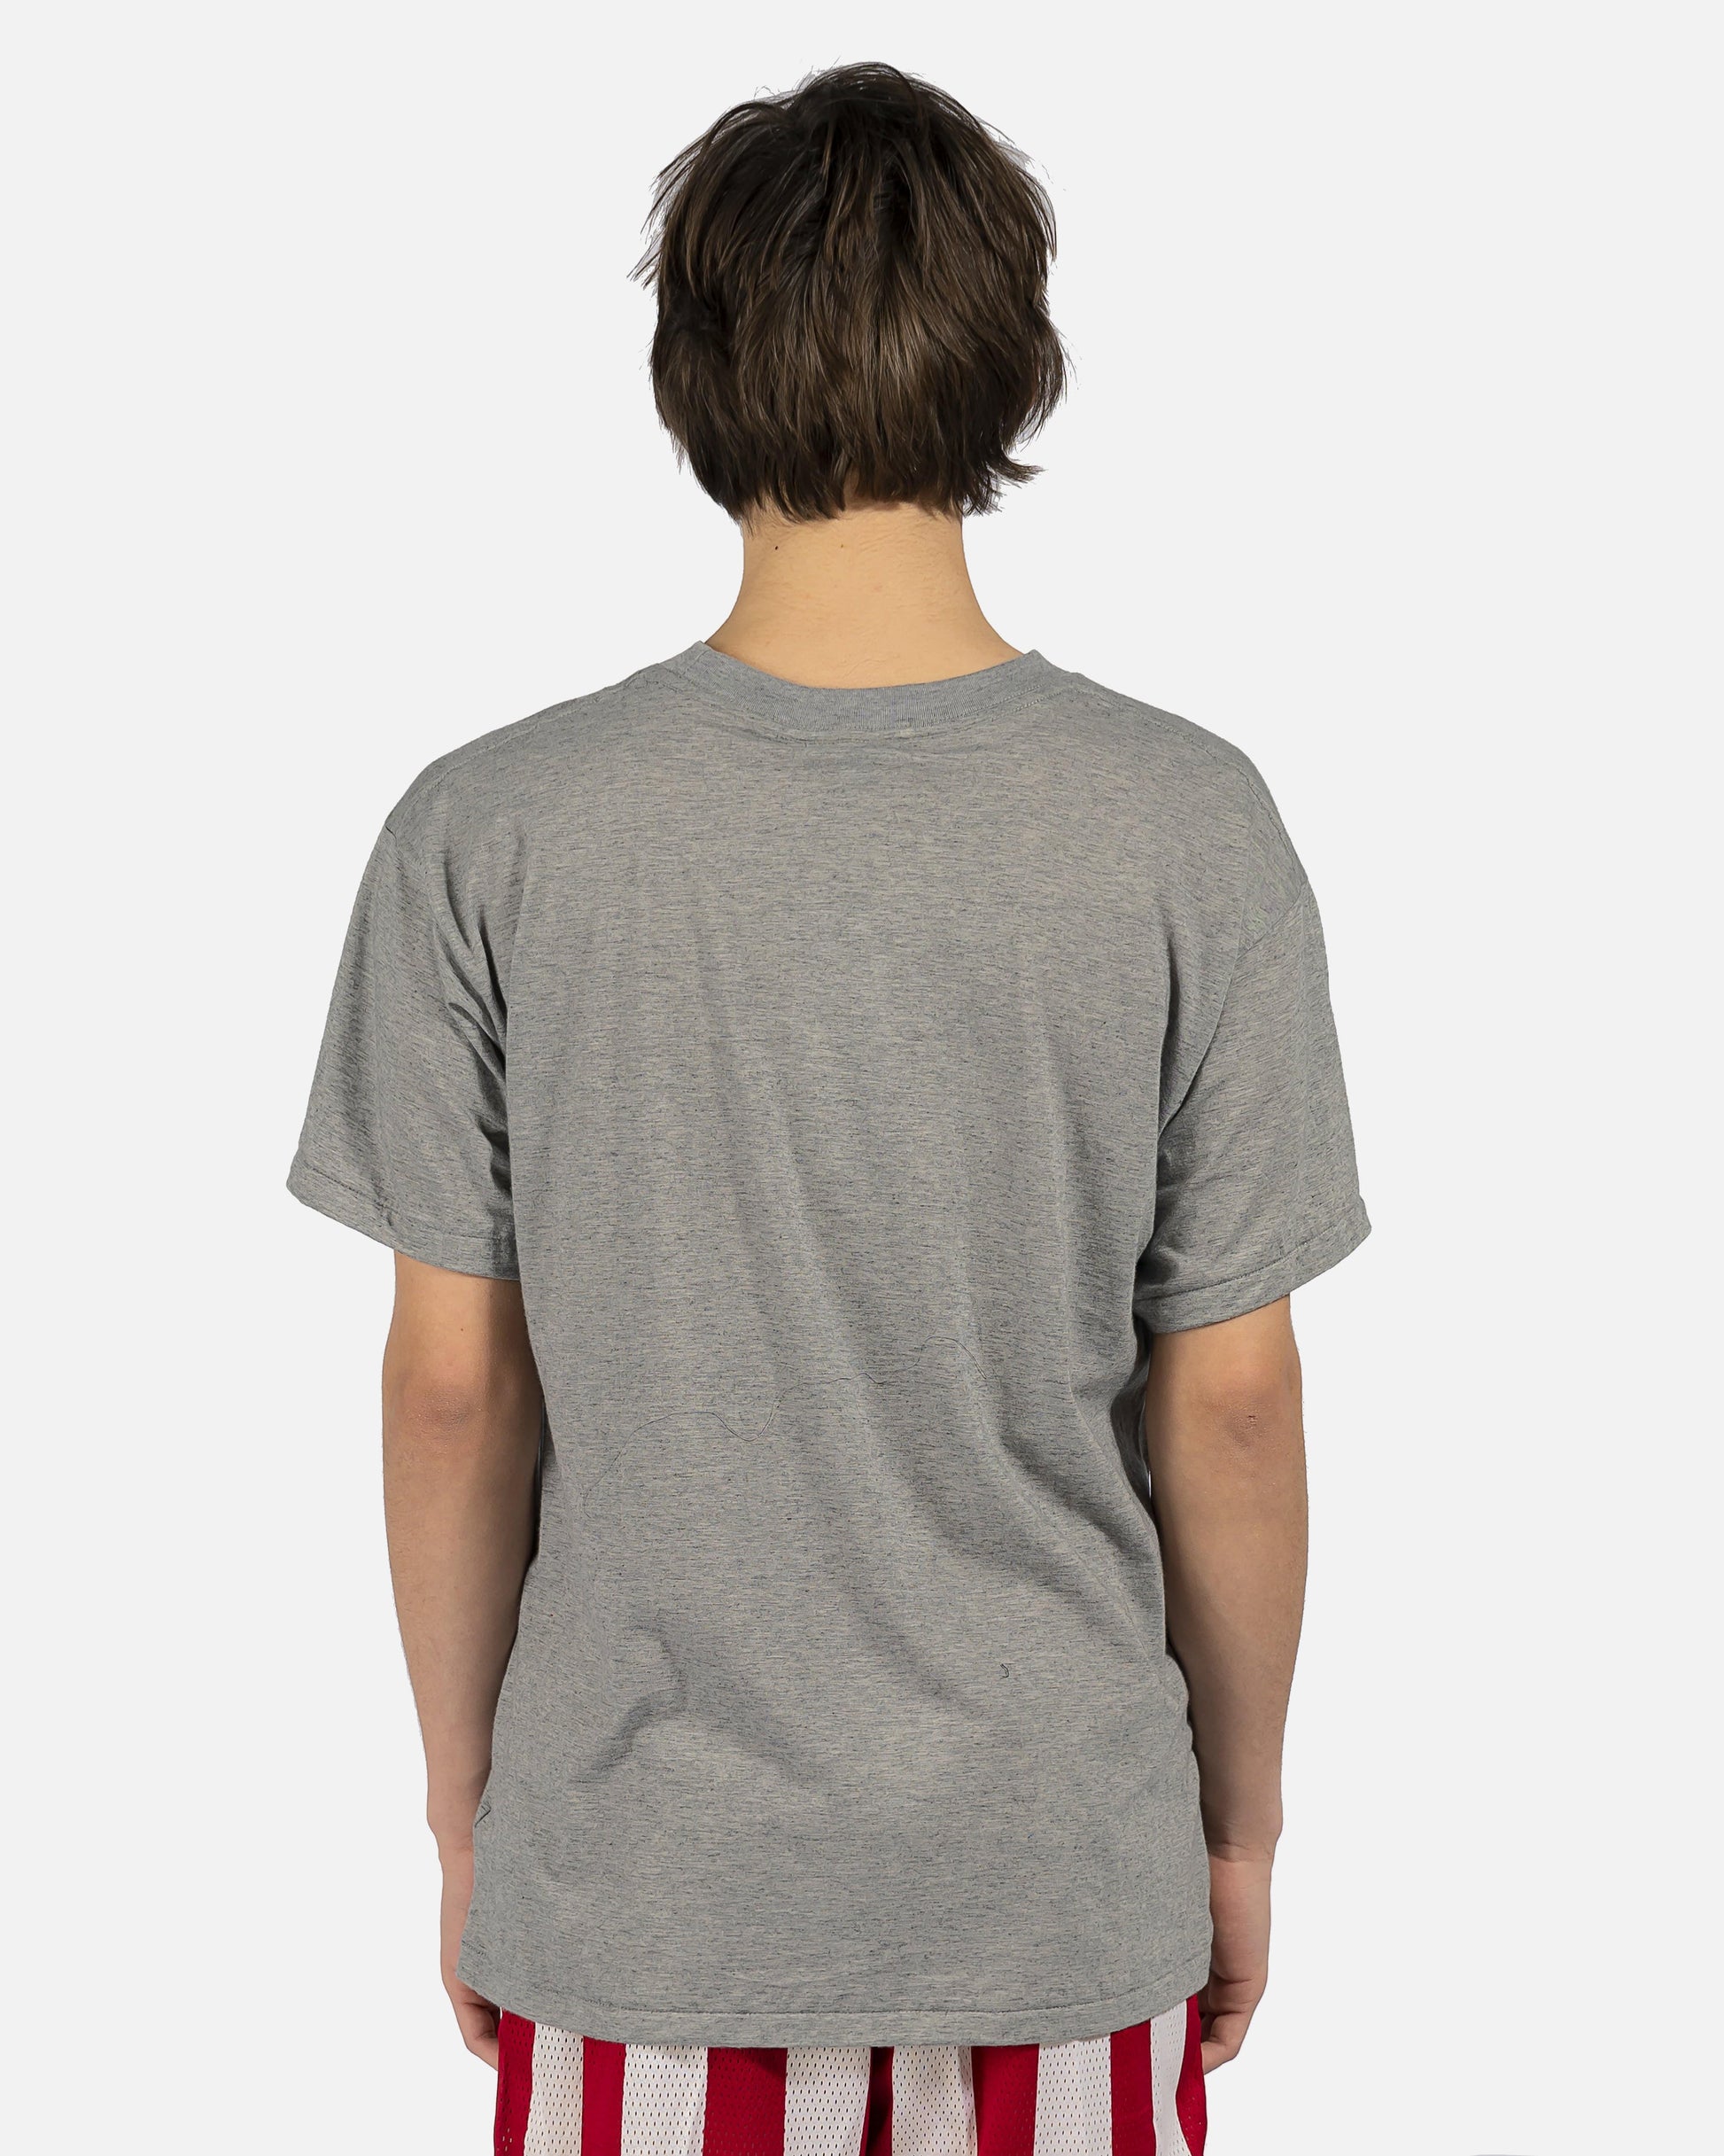 John Elliott Men's T-Shirts Cotton Cashmere T-Shirt in Heather Grey